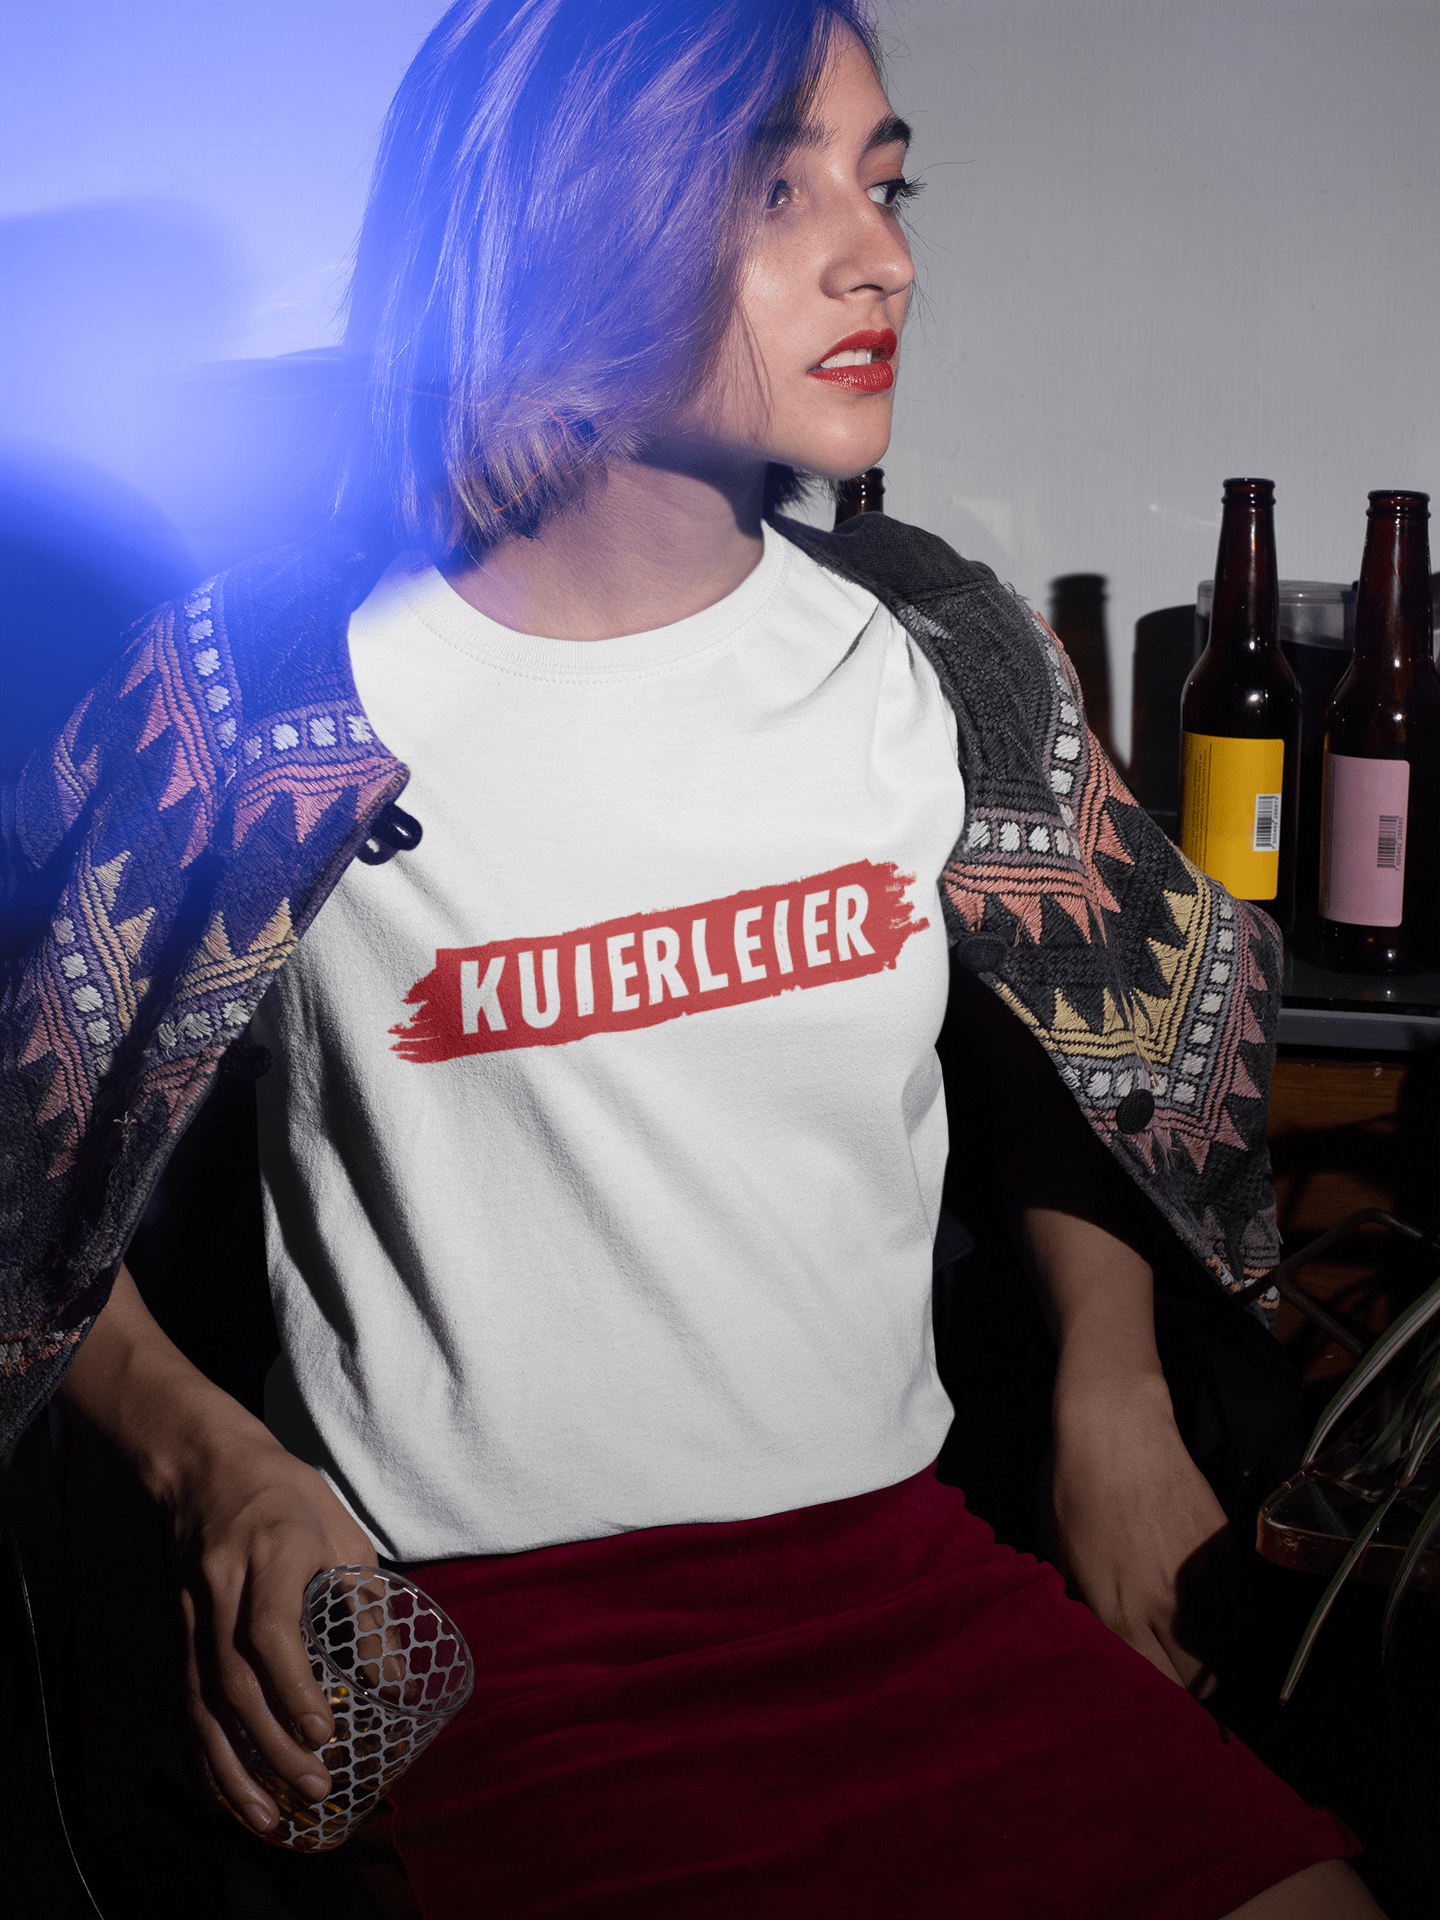 Idees Vol Vrees® "KUIERLEIER" Rooi/Wit Women's T-shirt